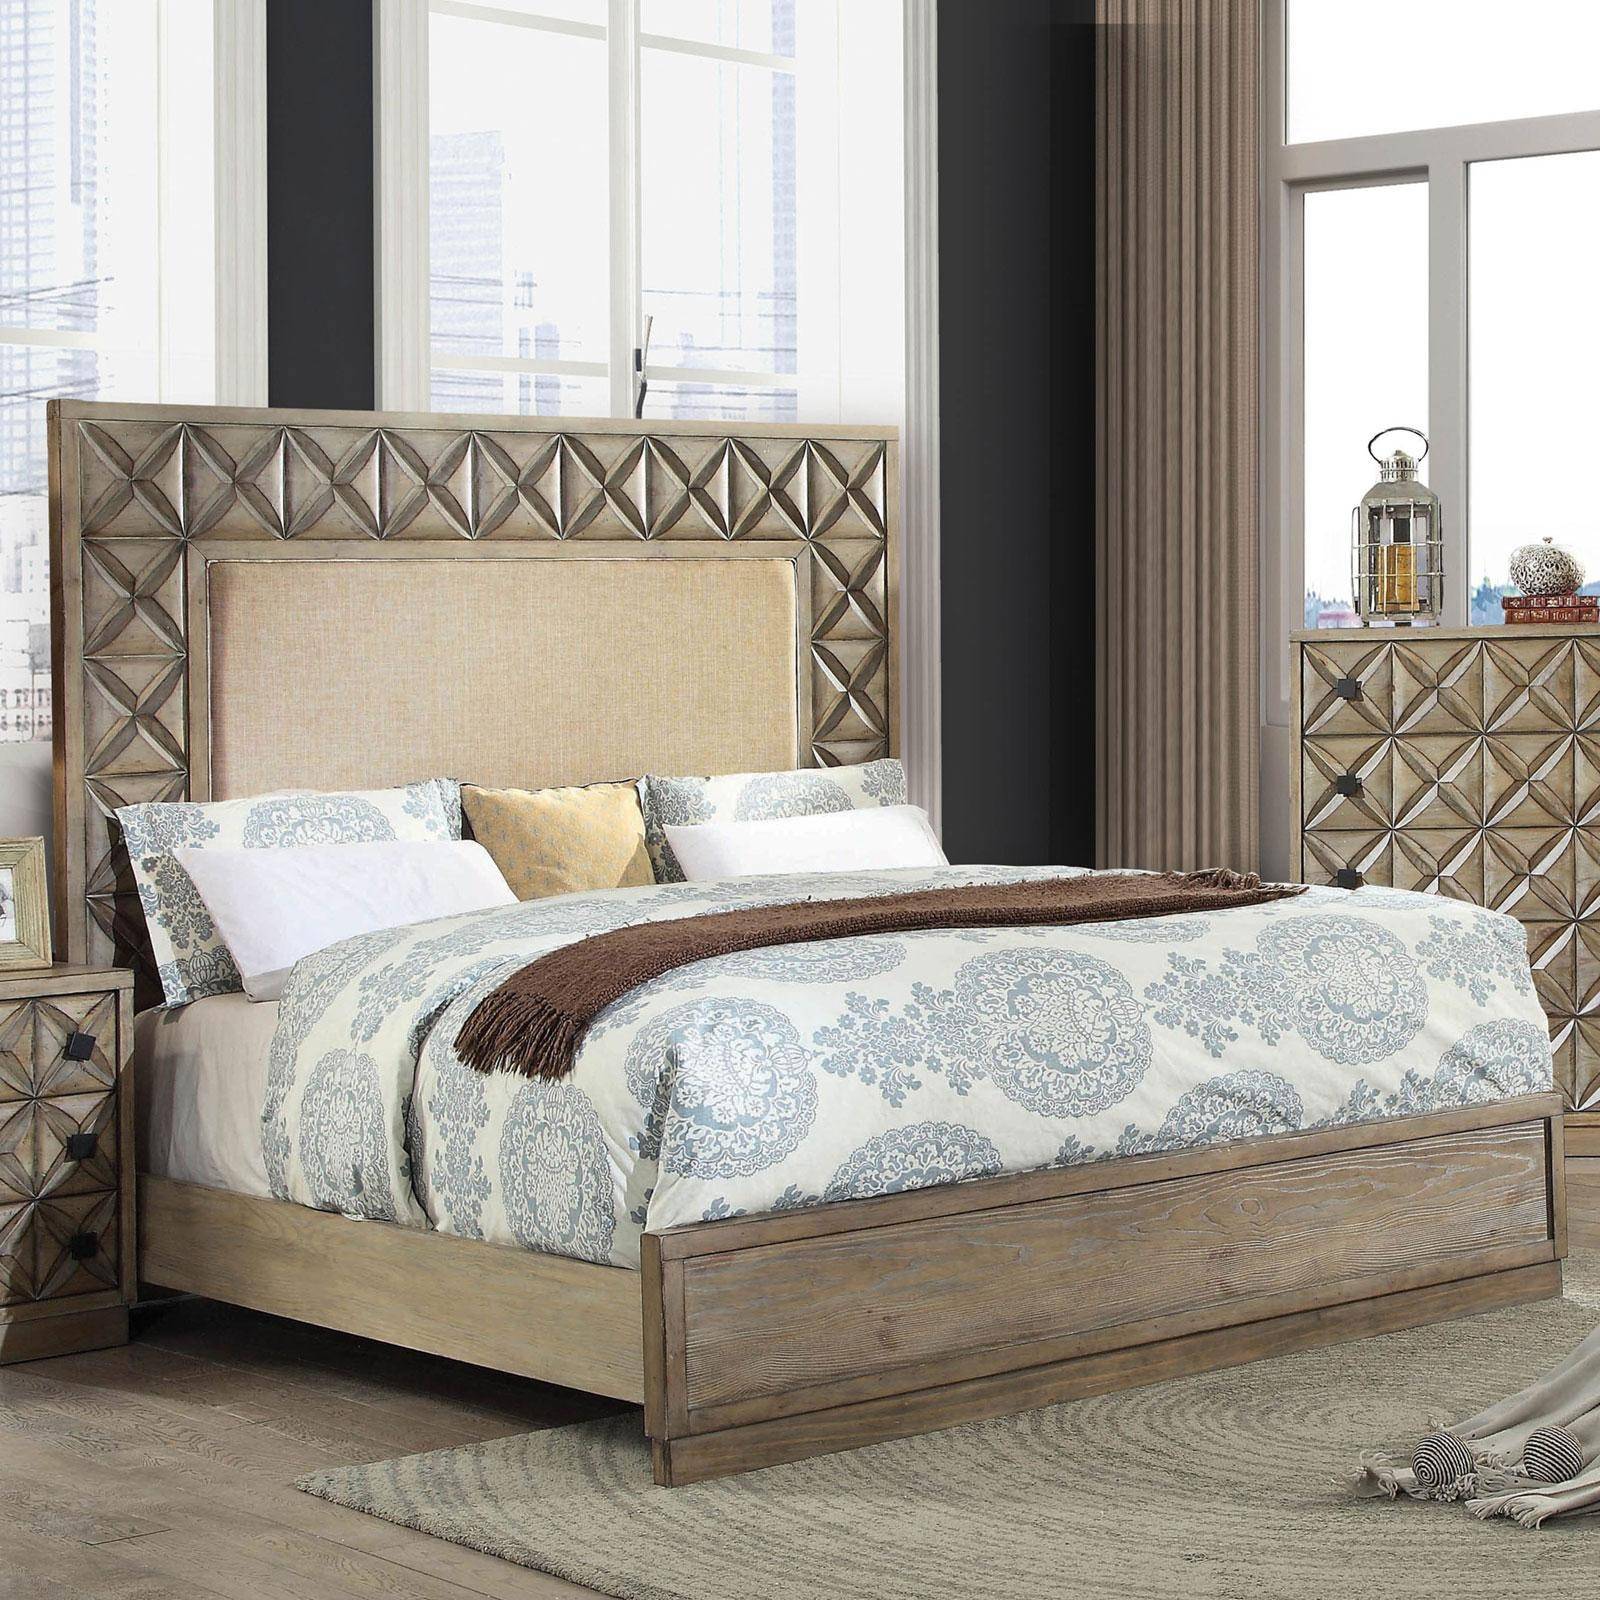 Furniture Of America Markos, Tall California King Bed